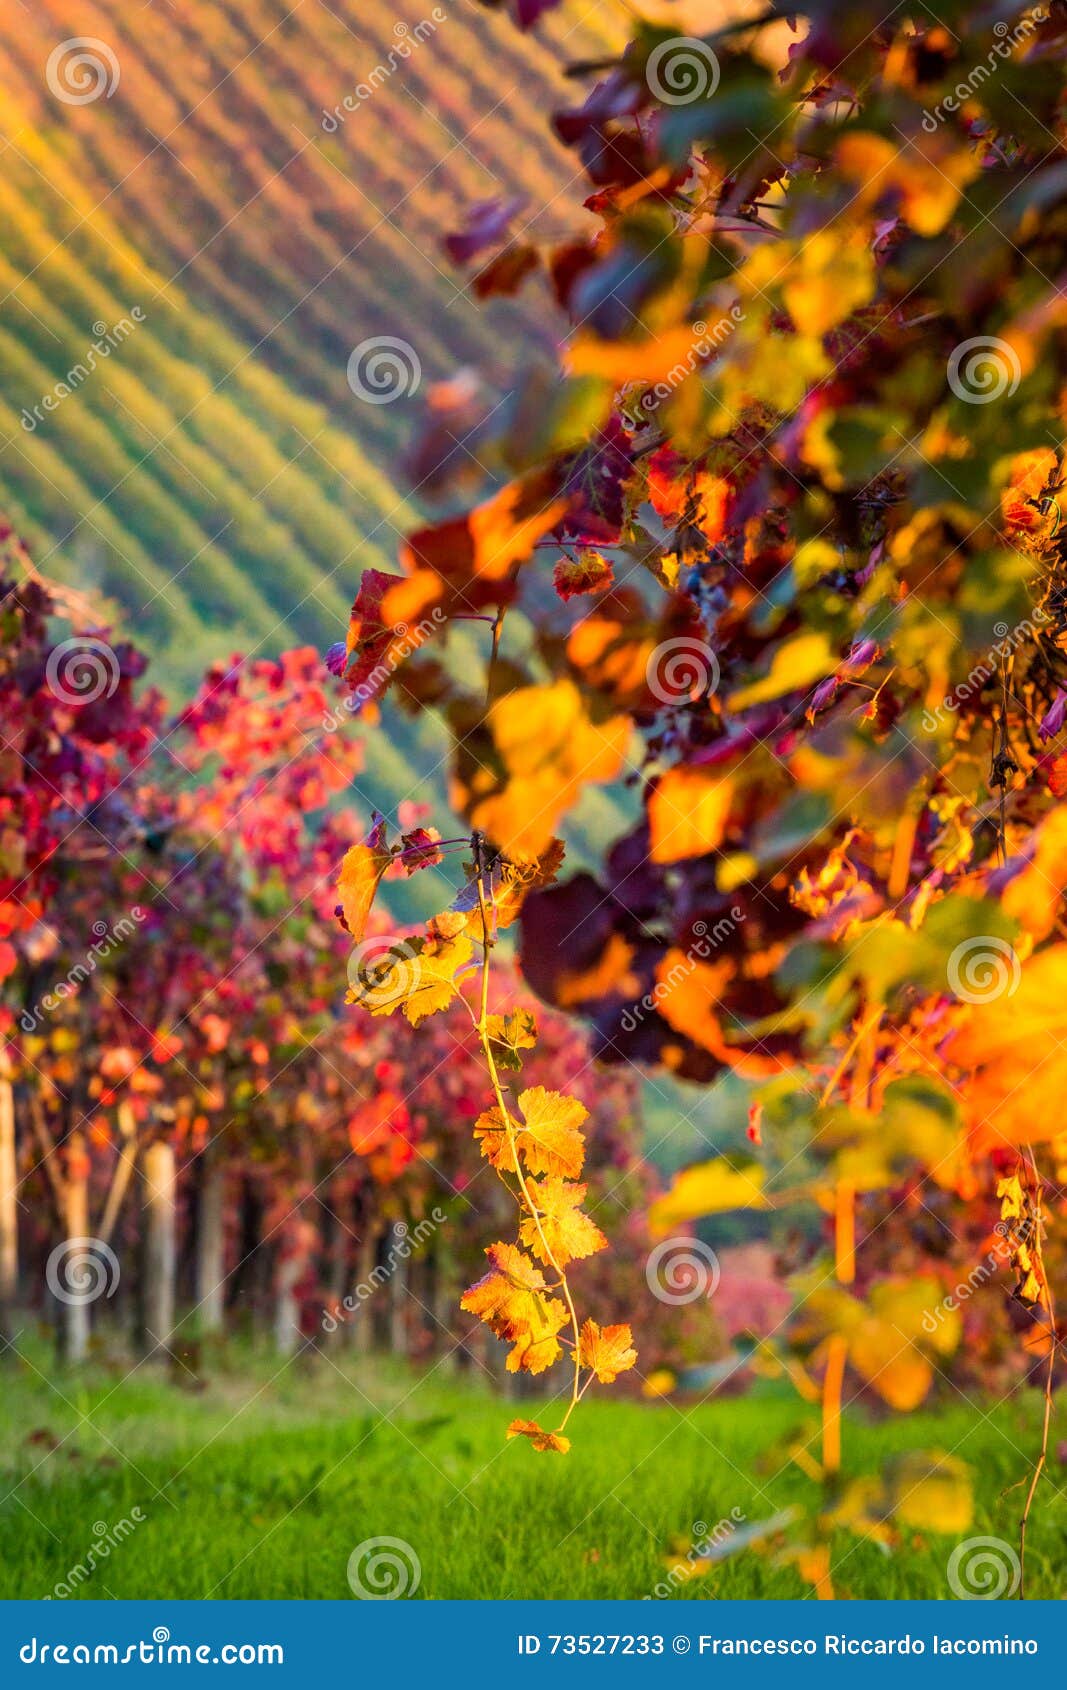 castelvetro di modena, vineyards in autumn